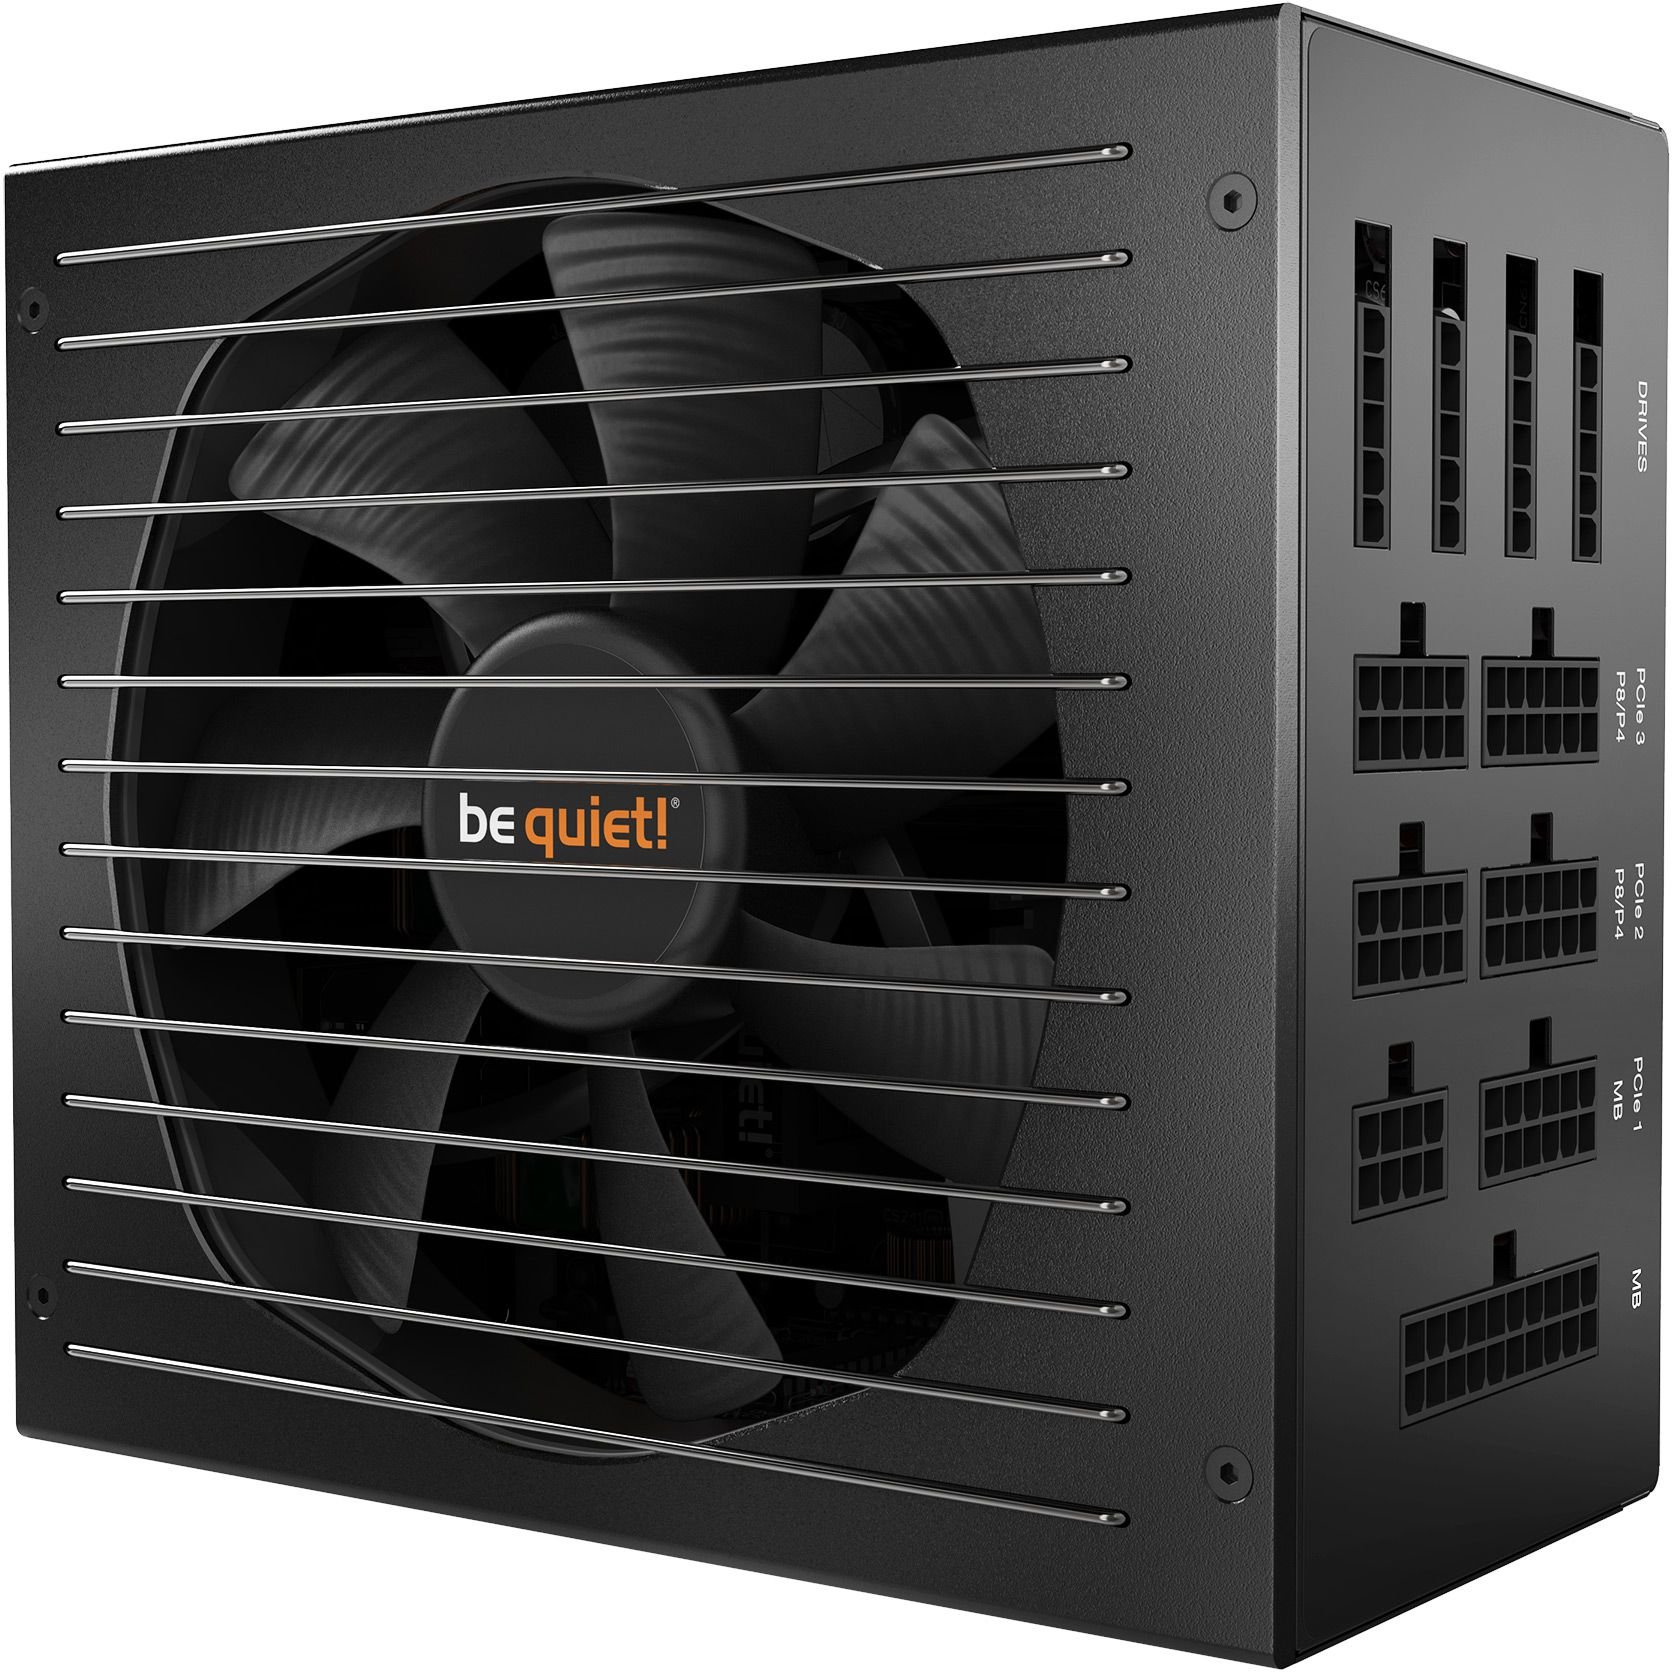 Sursa PC Be quiet Power Supply , 850W , 80PLUS GOLD